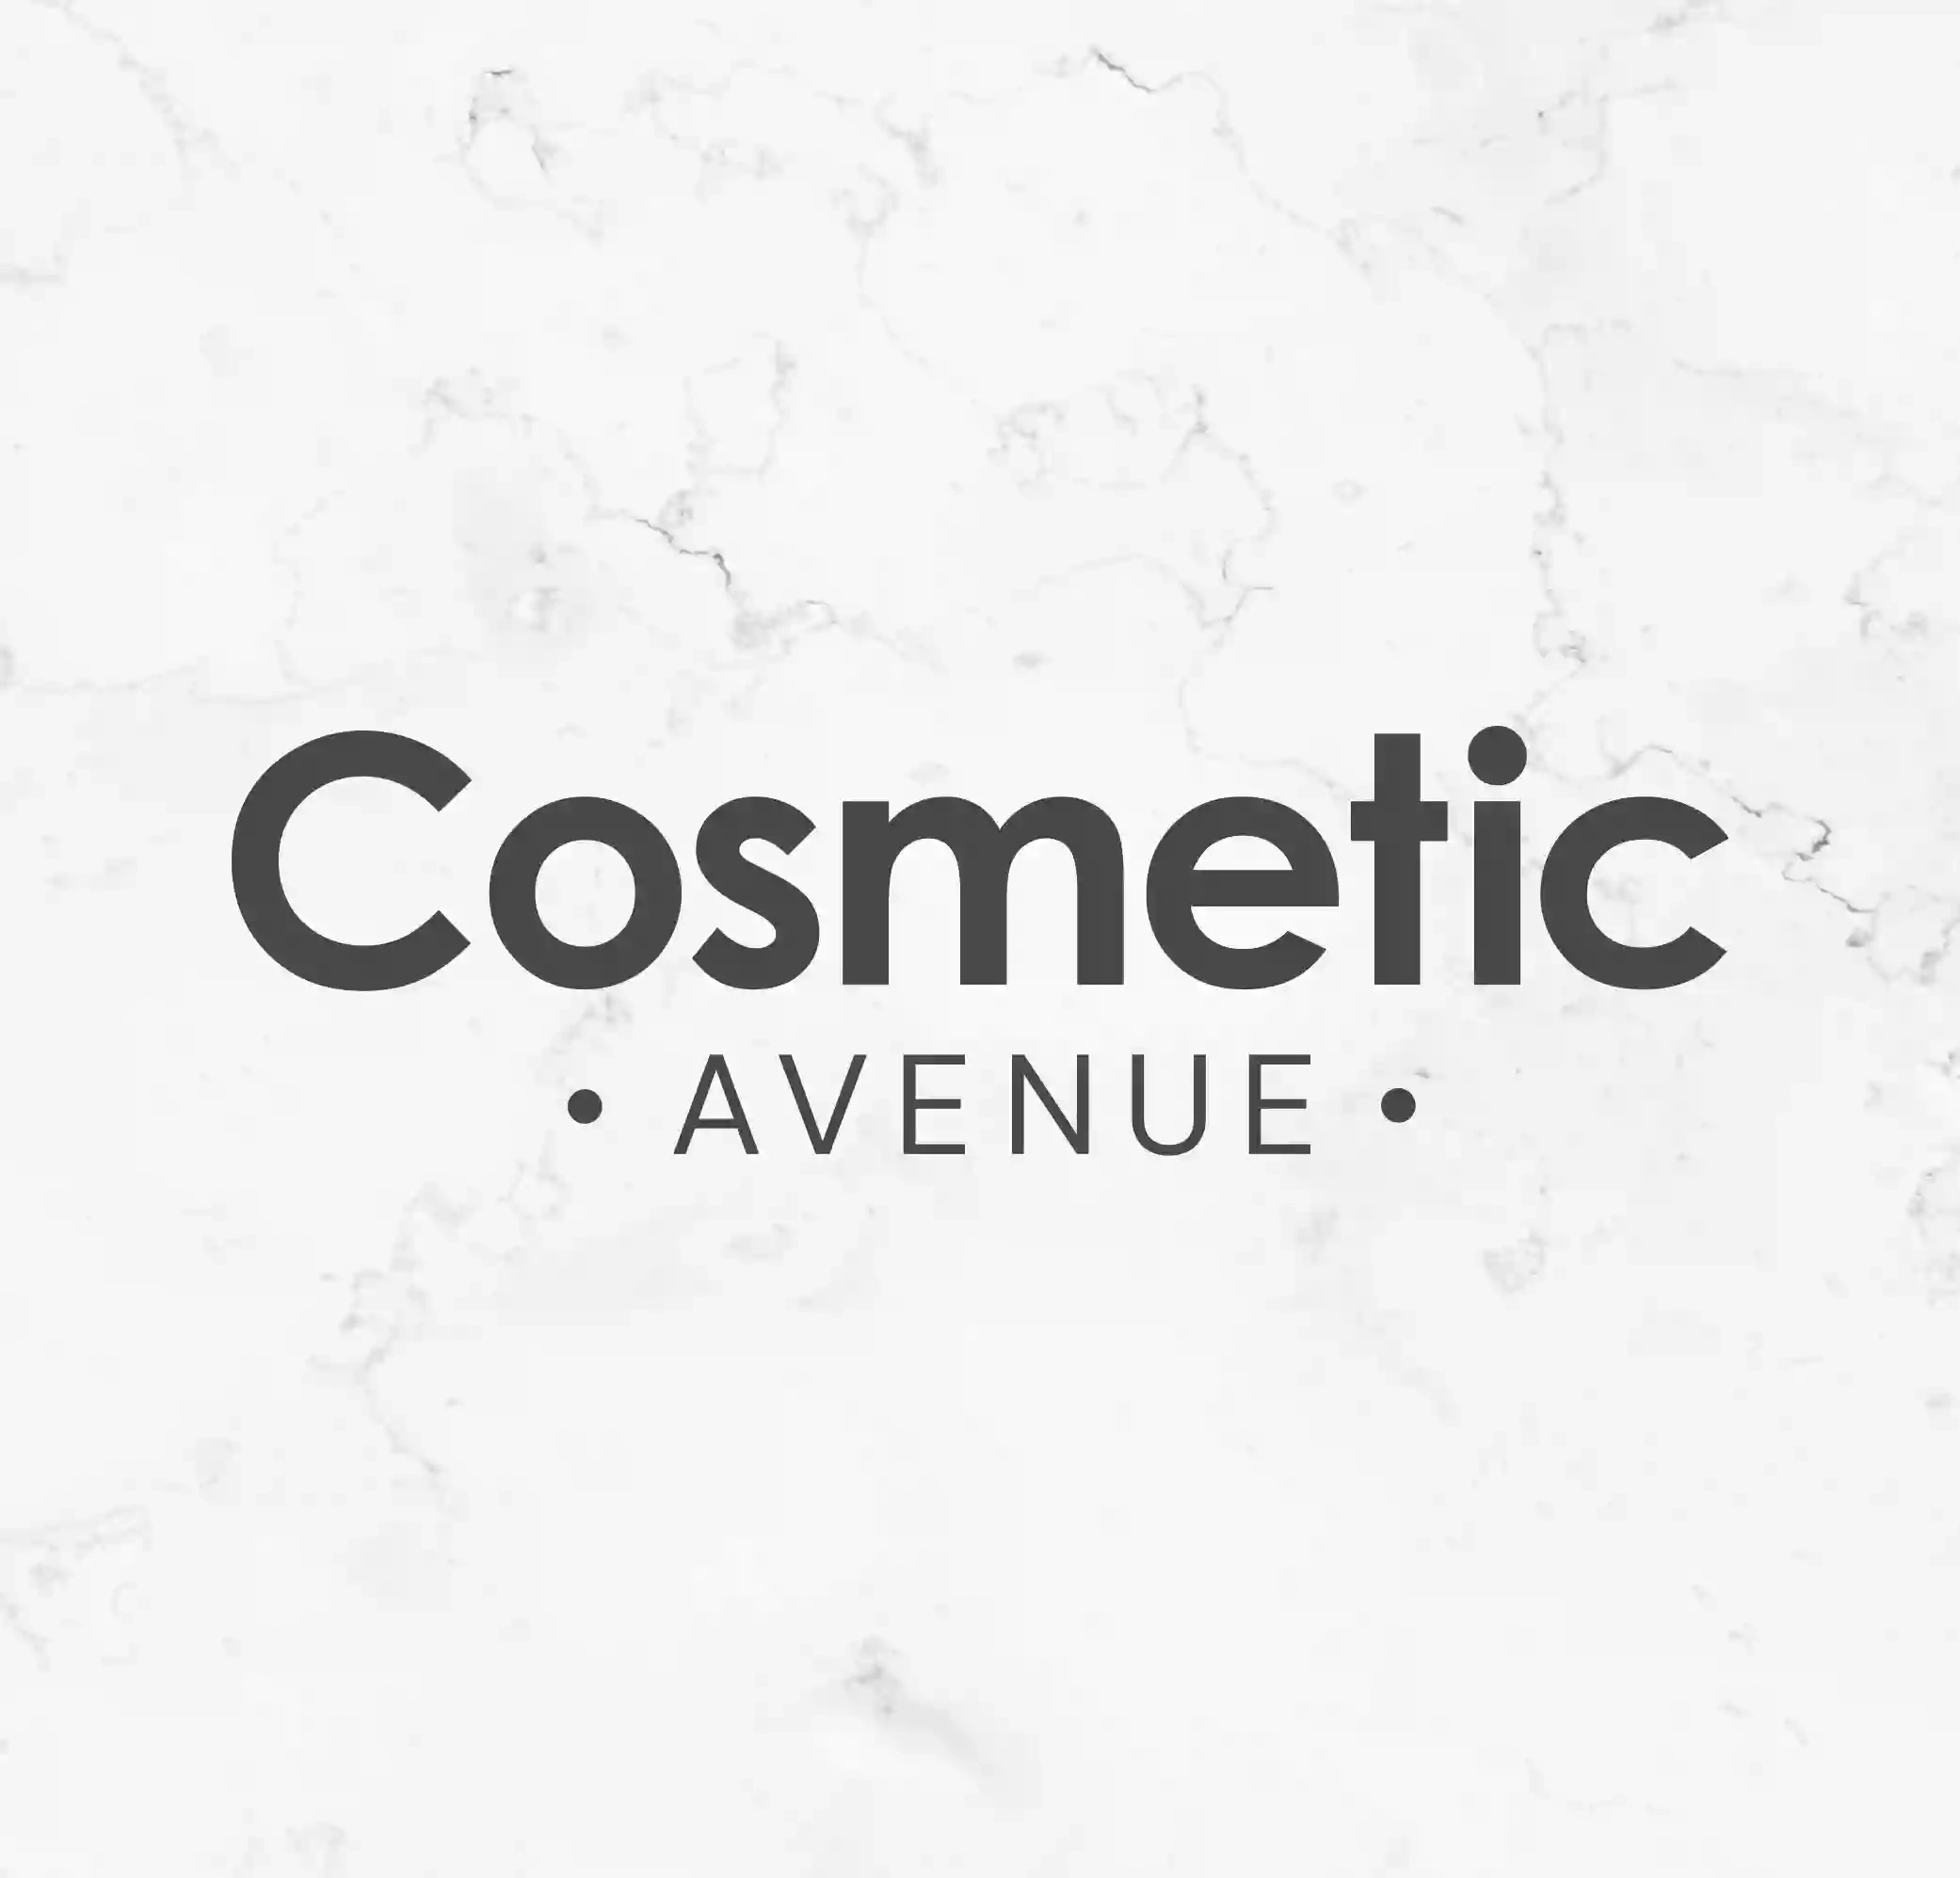 Cosmetic Avenue